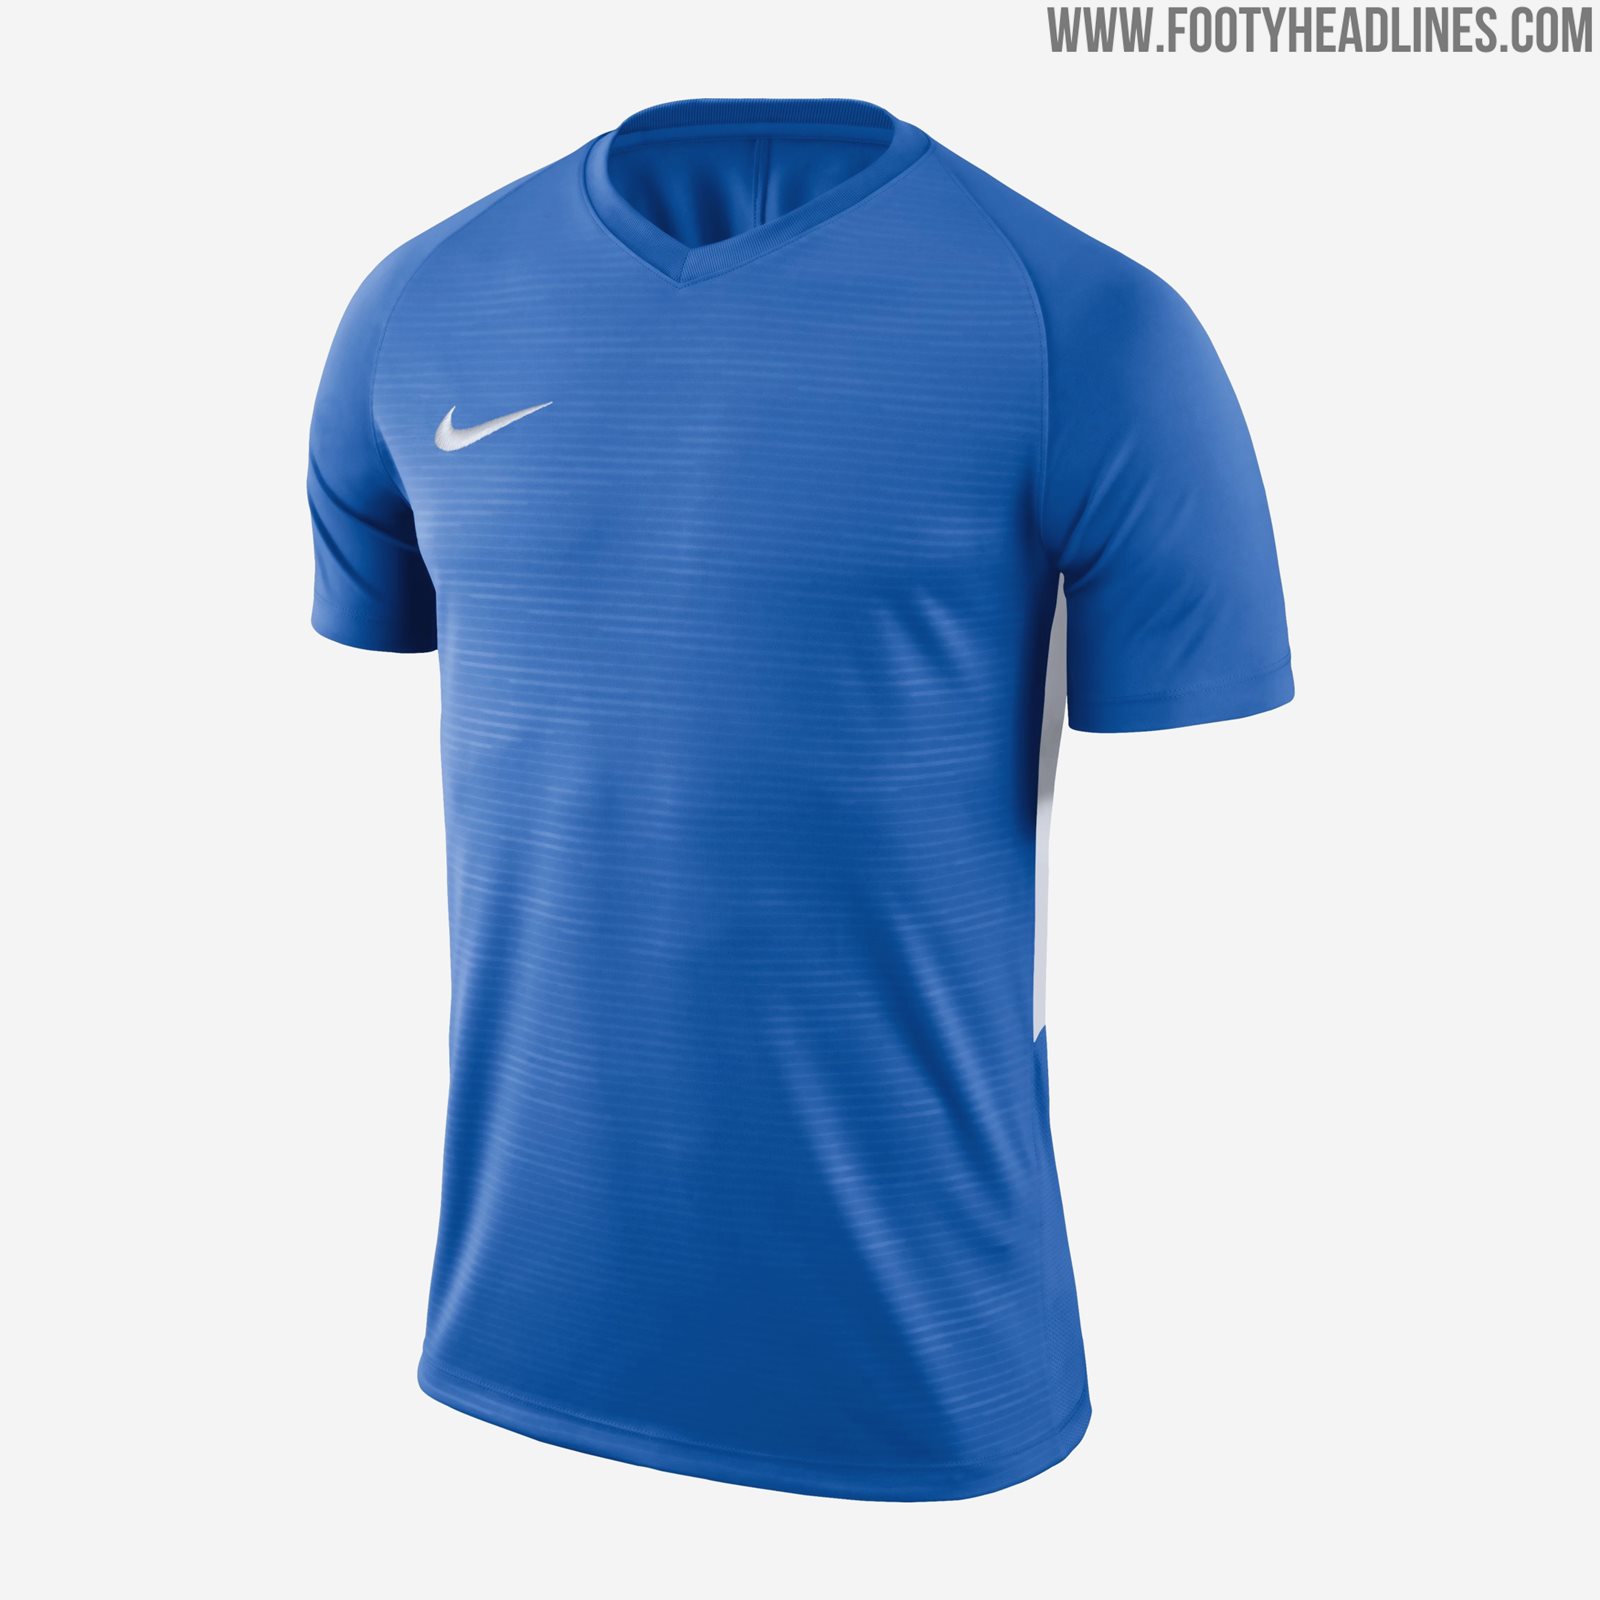 All Nike 20-21 Teamwear Kits Released - 3 New Player & 2 New GK ...